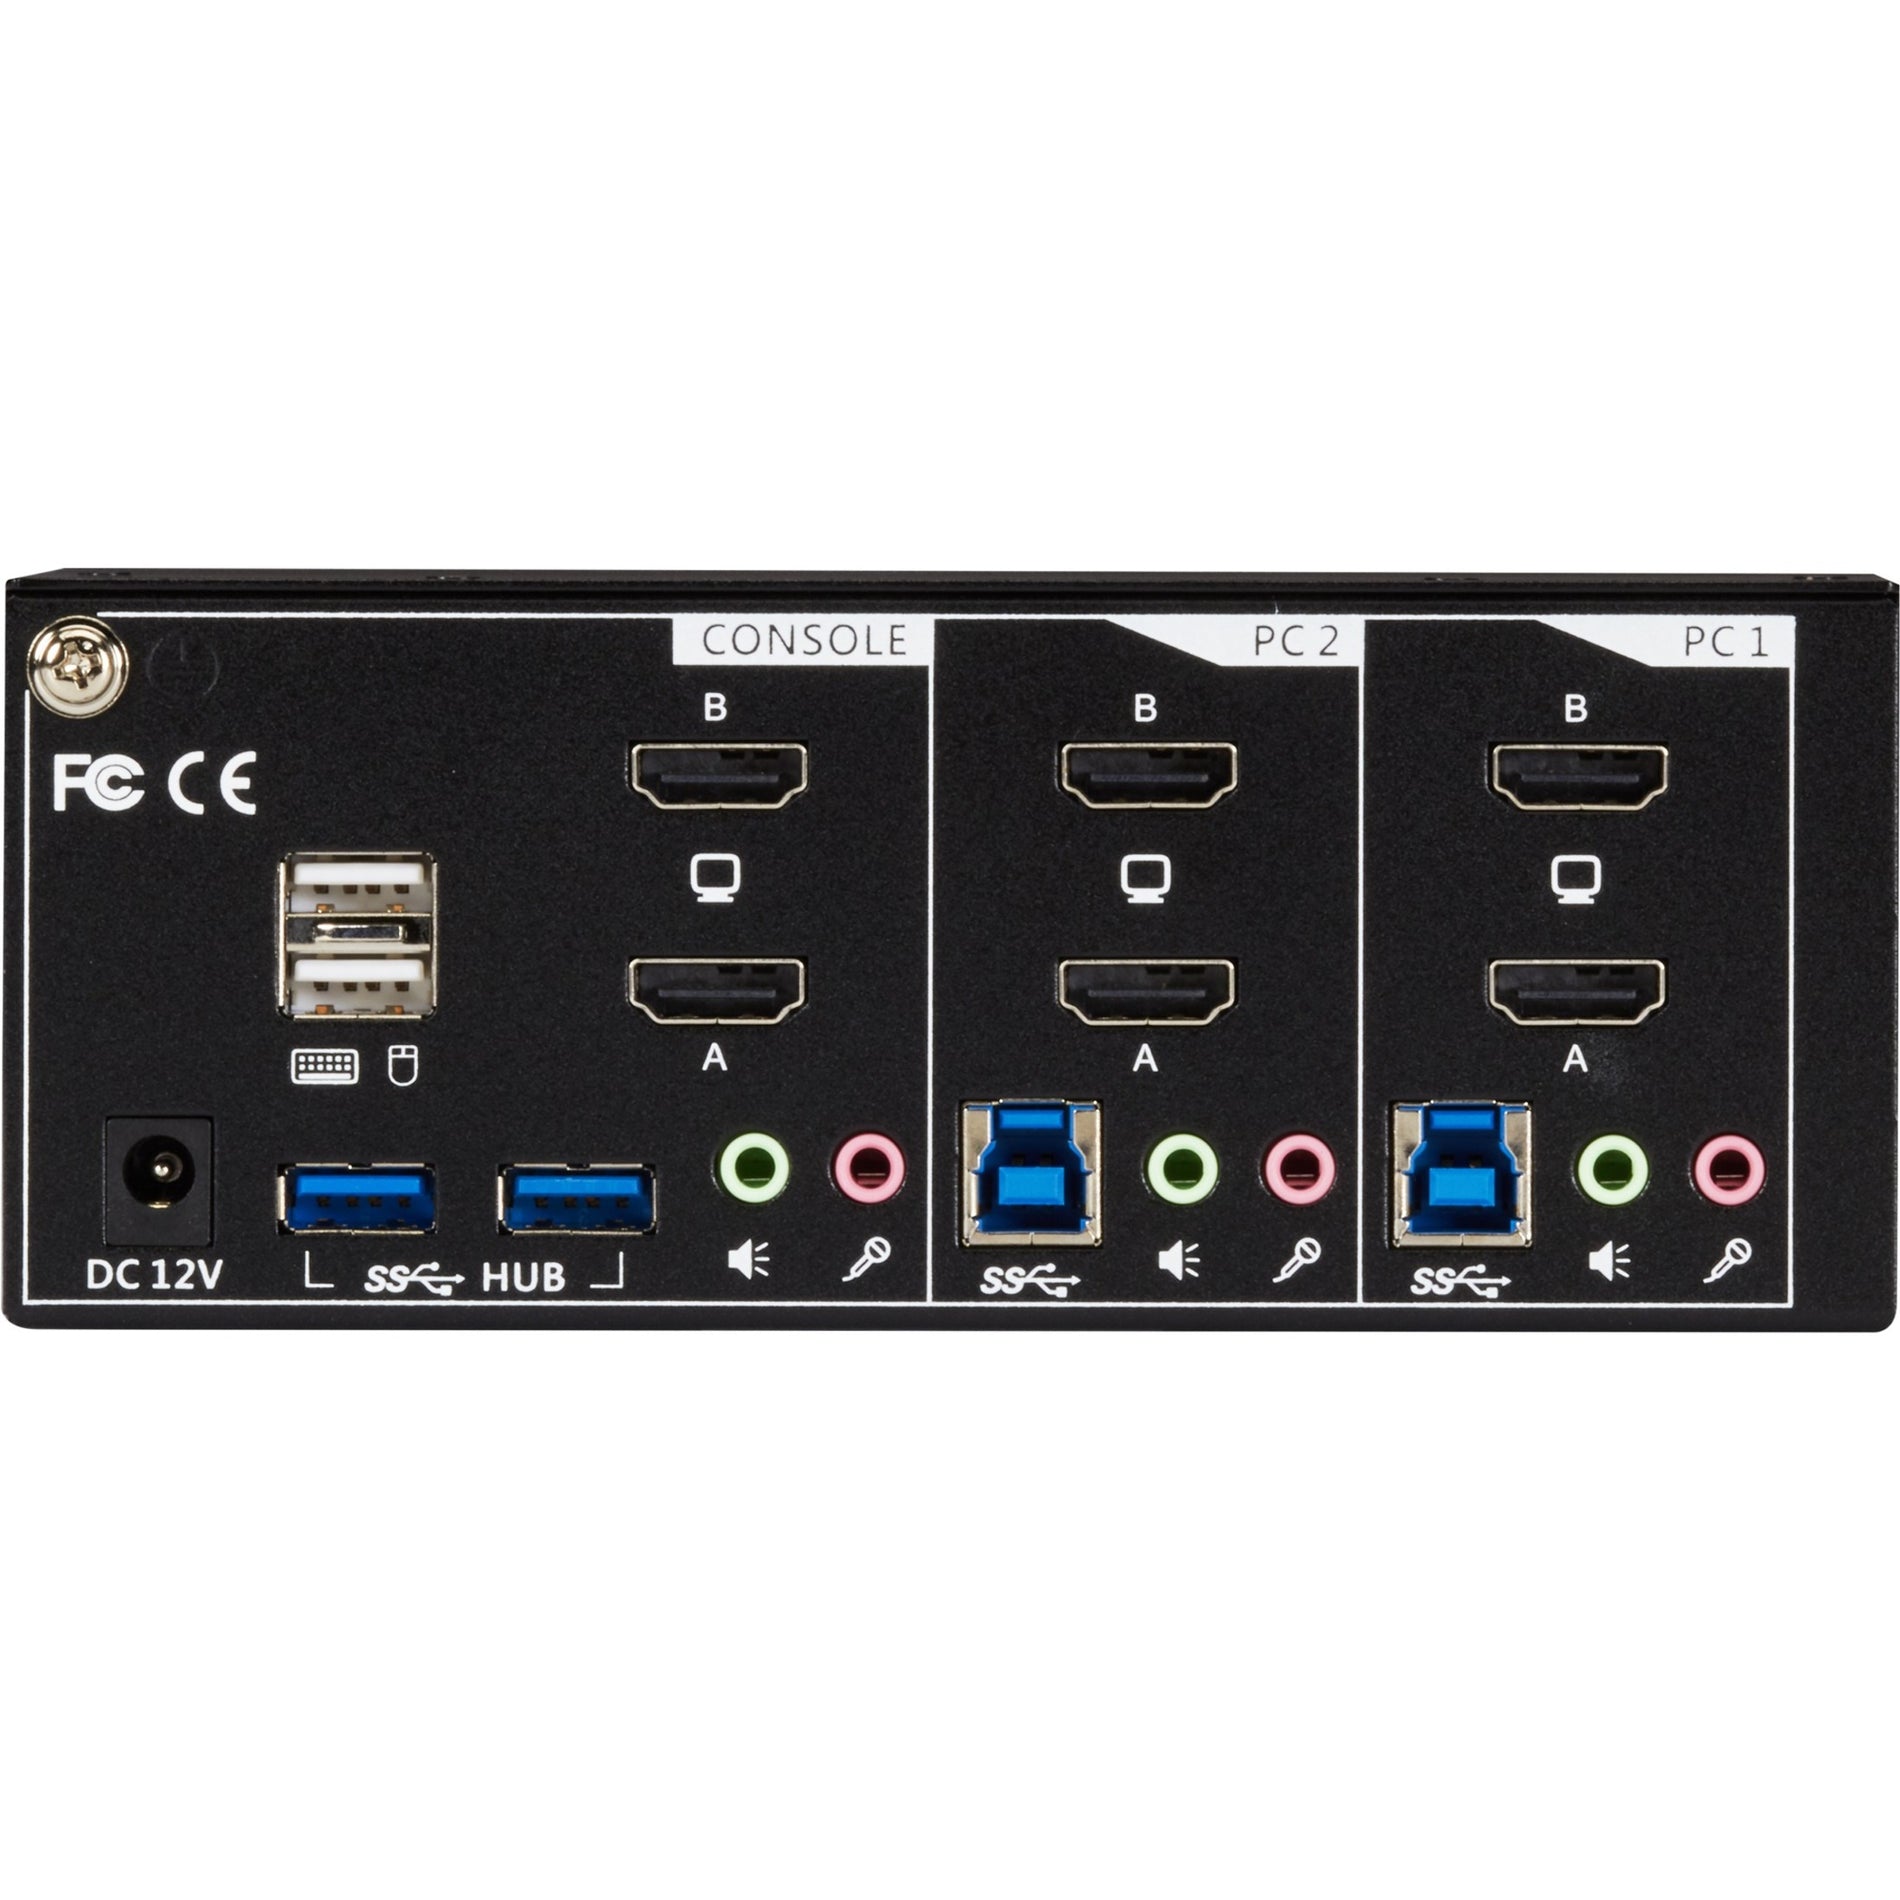 Black Box KV6222H KVM Switch - 2-Port Dual-Monitor HDMI 2.0 4K 60Hz USB 3.0 Hub Audio Share Two 4K Displays with Two Computers